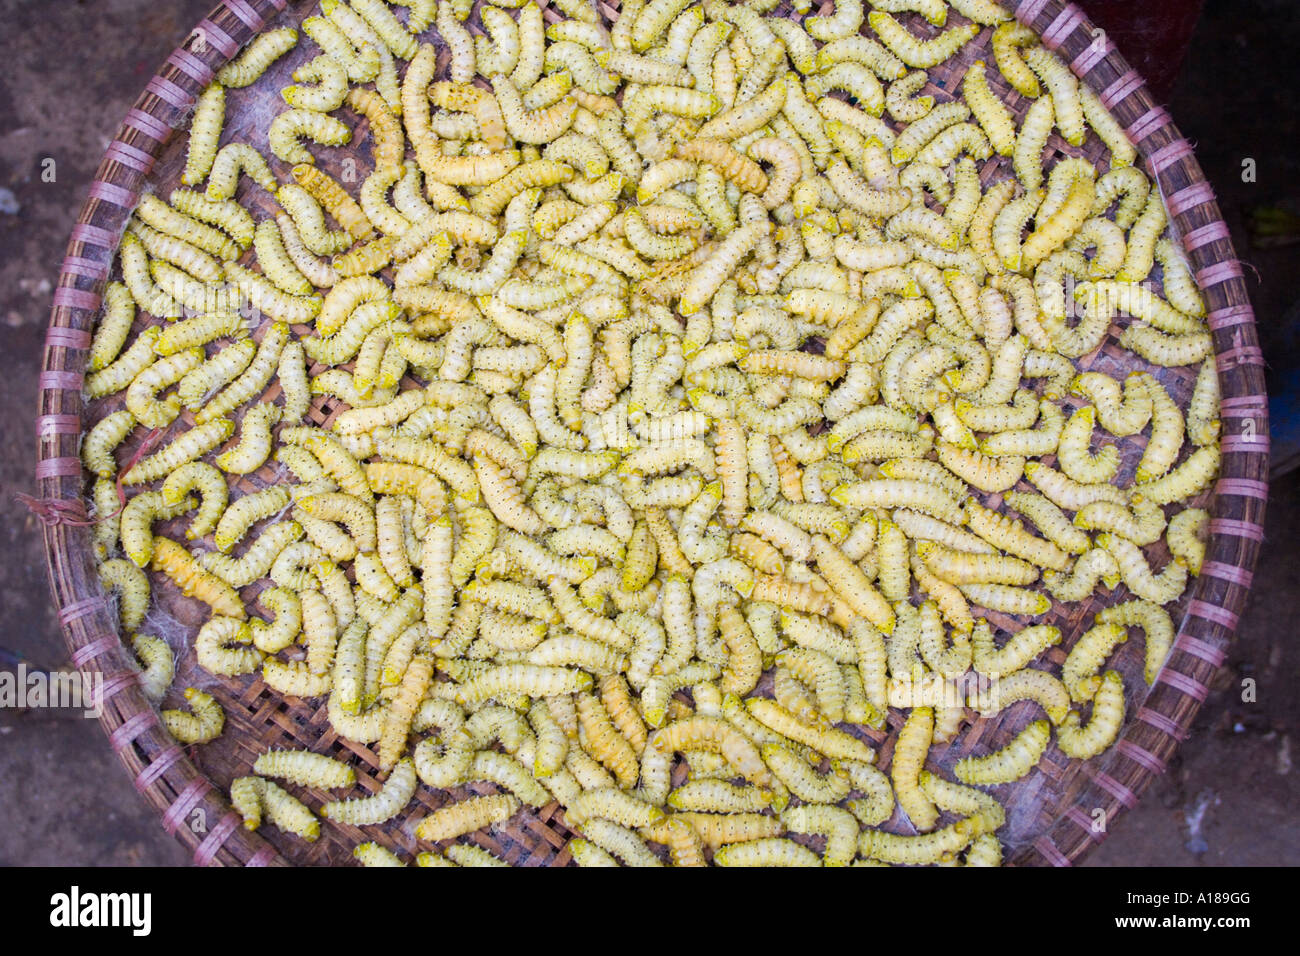 2007 Caterpillars for Sale Bac Ha Market Vietnam Stock Photo